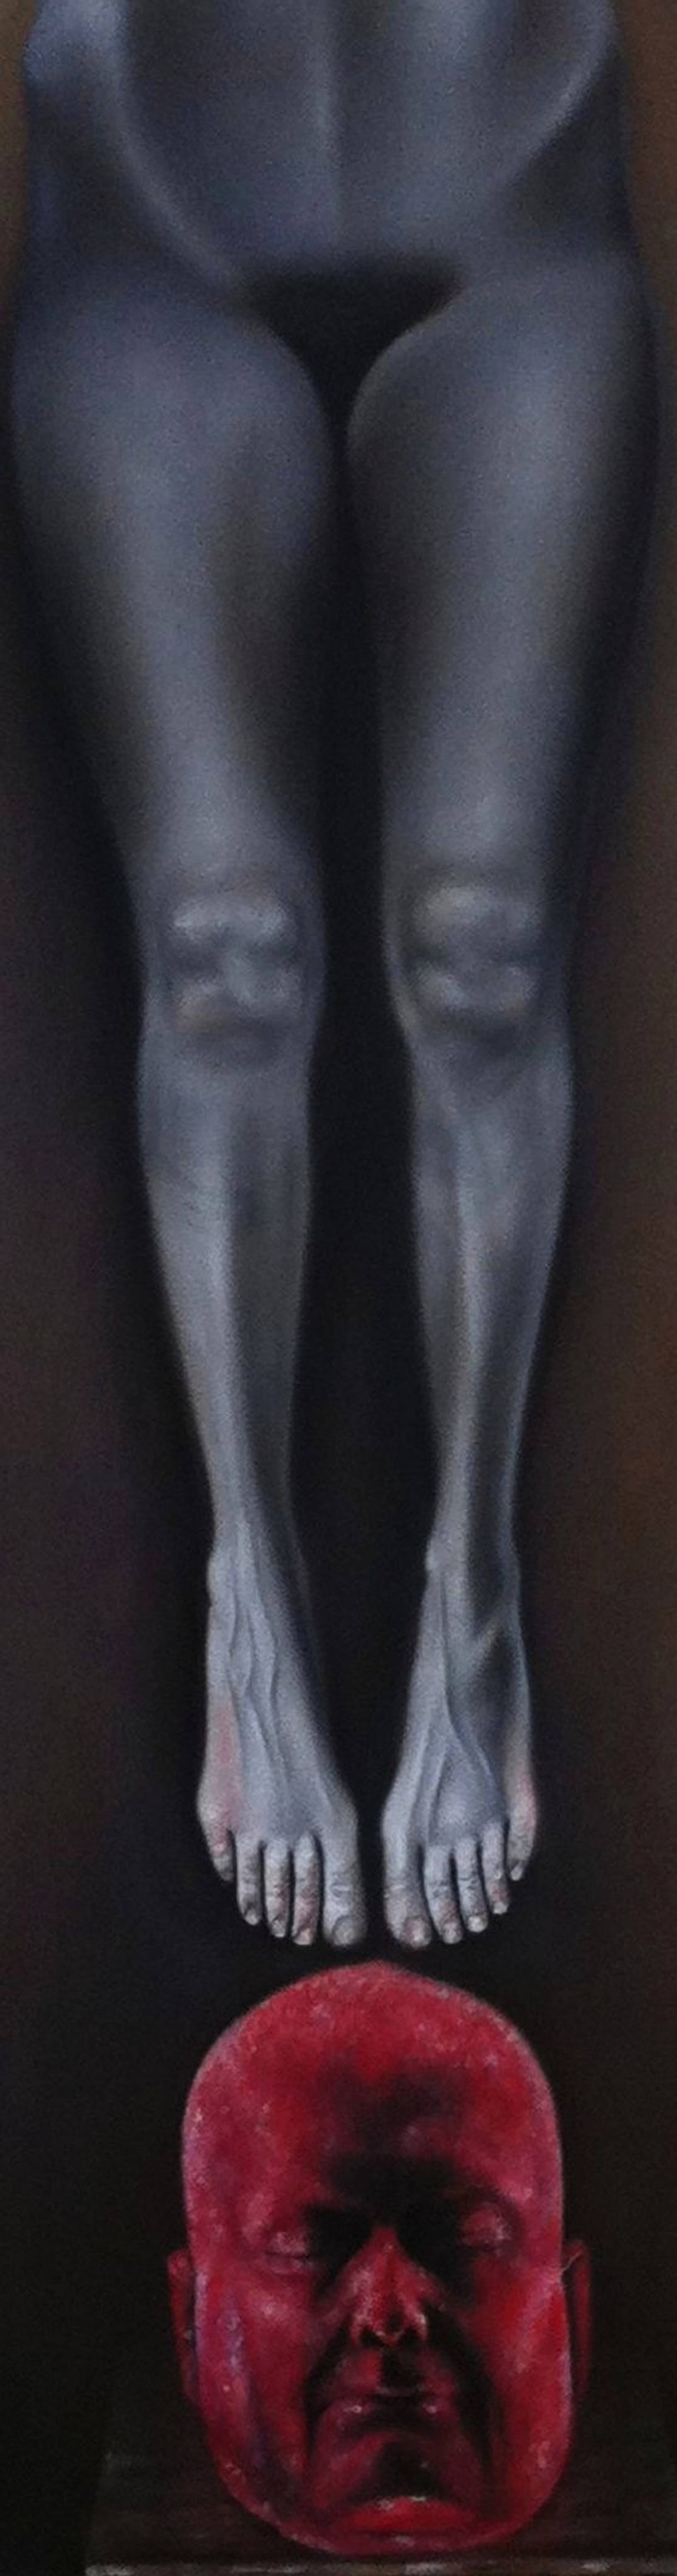 Image result for telo shannon carr long legs paintings